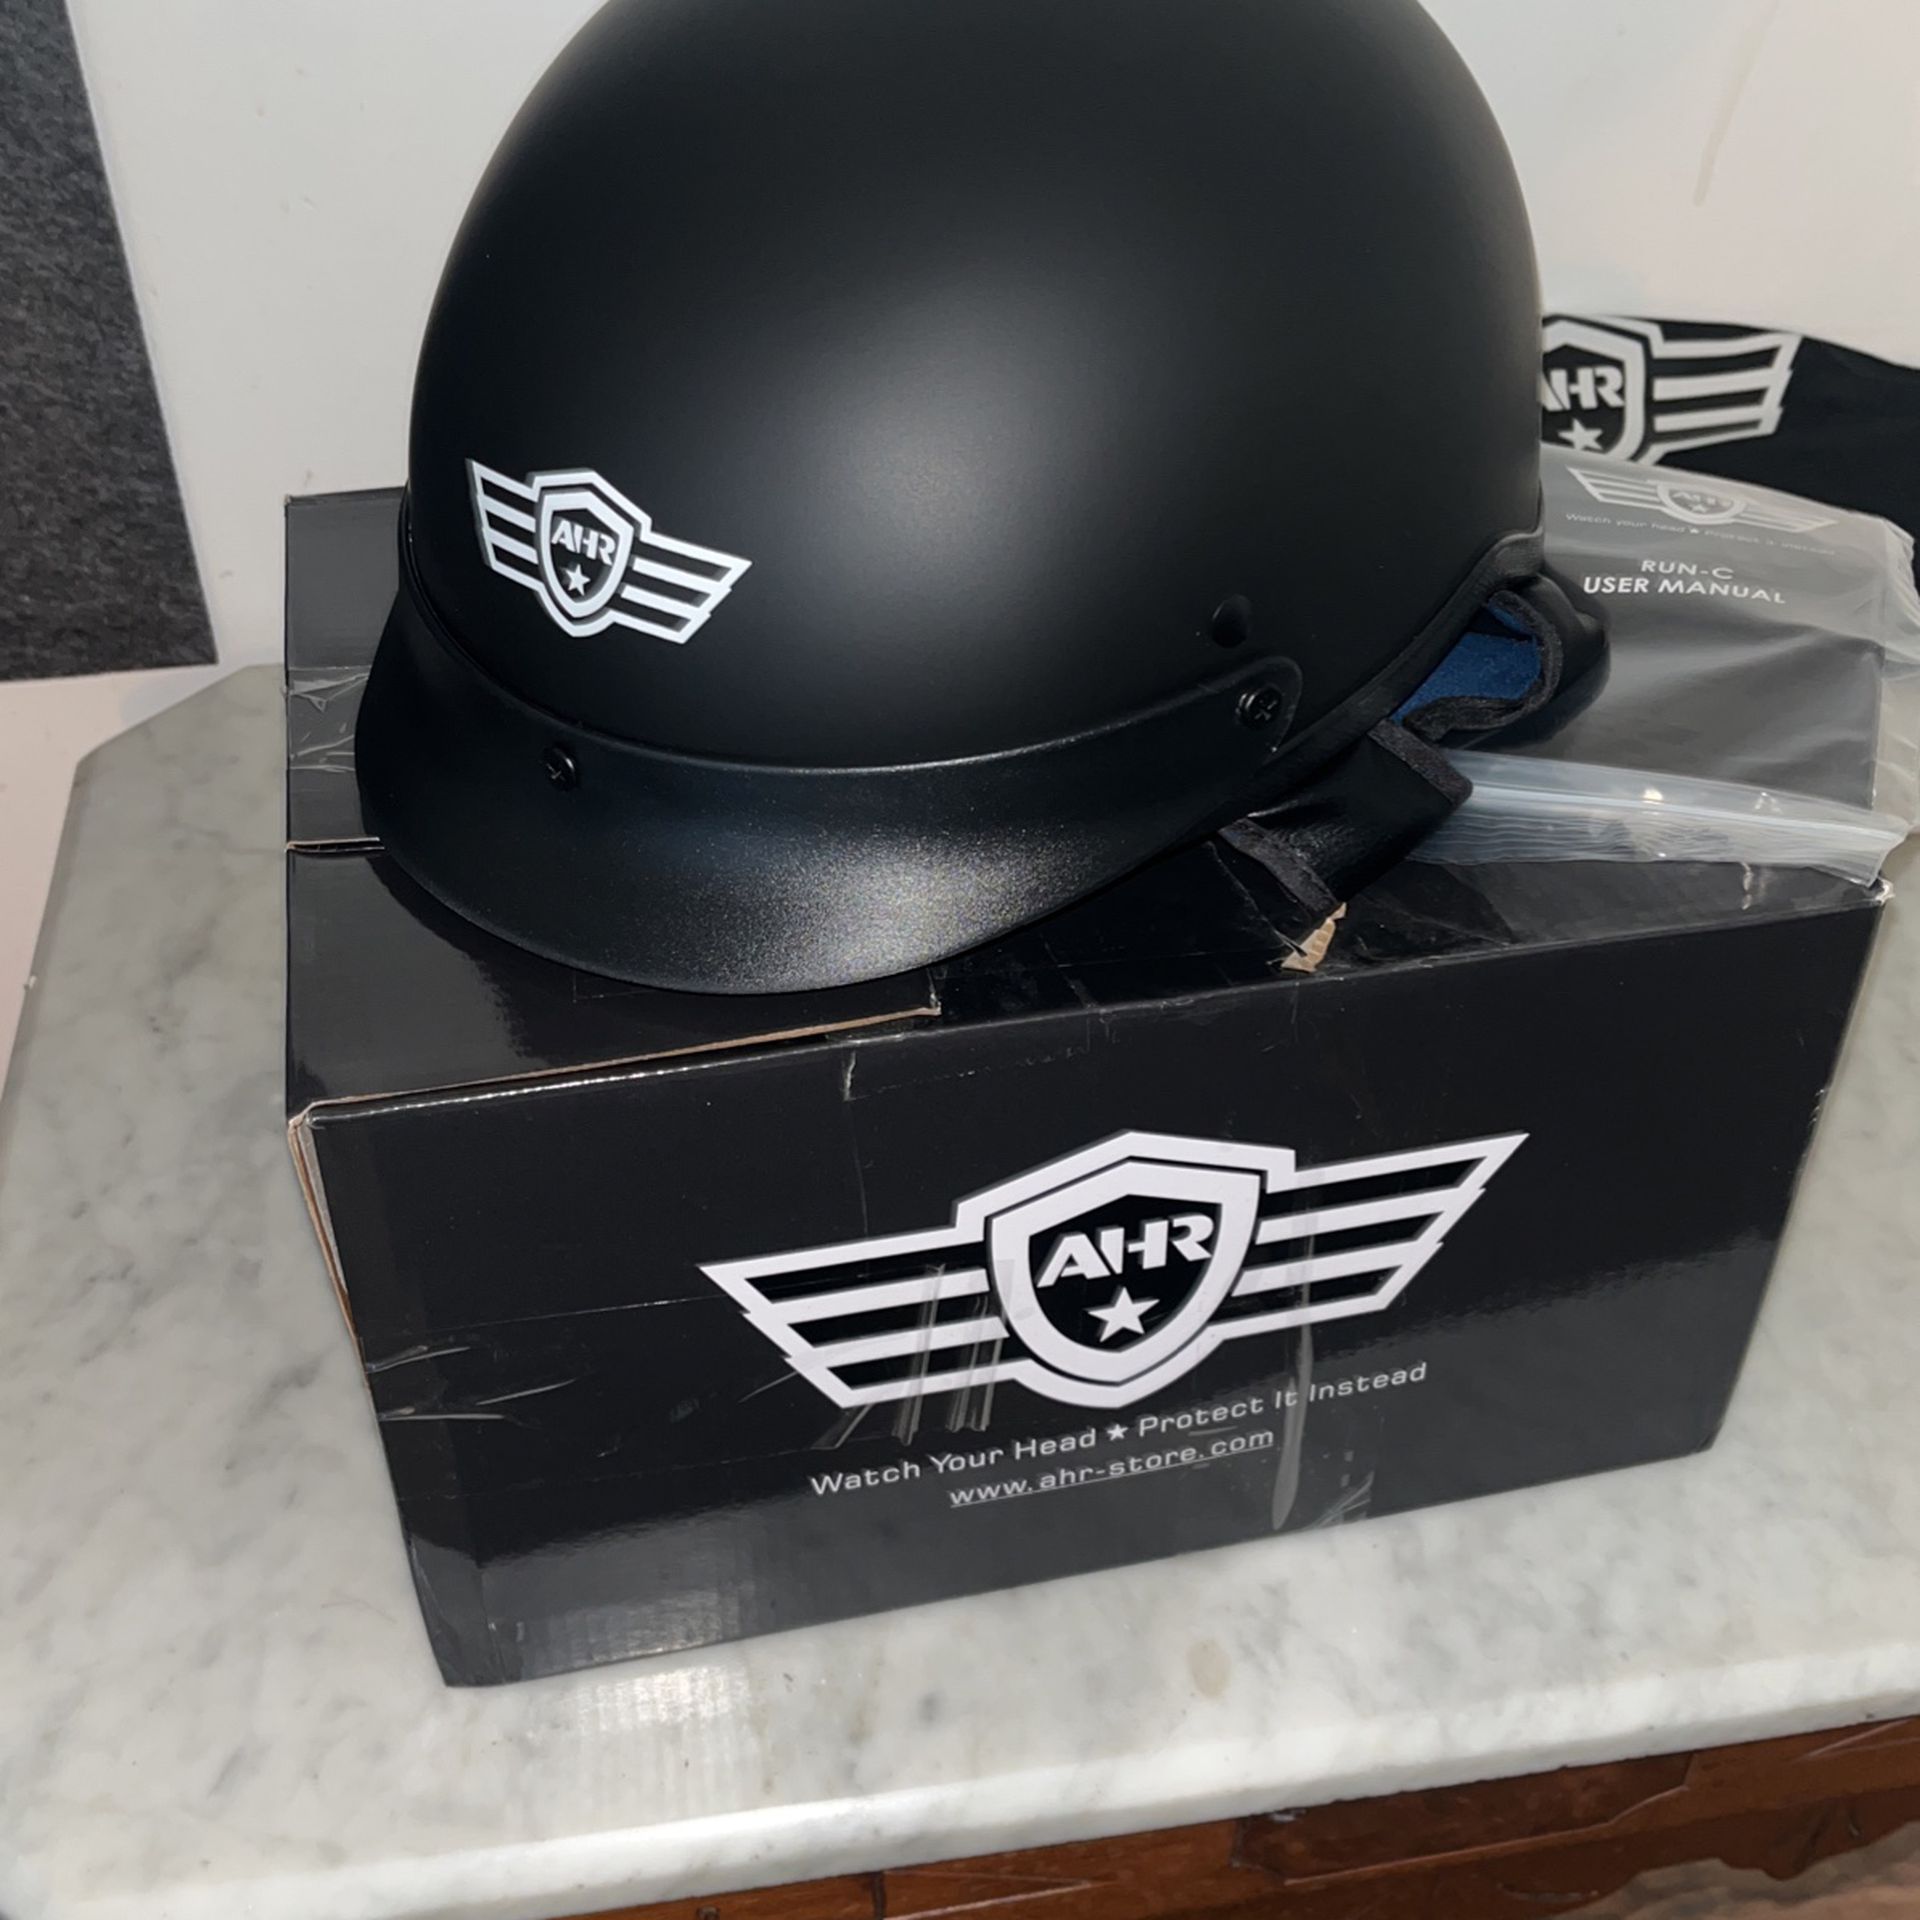 AHR RUN-C Motorcycle Helmet Size Lg. NEW